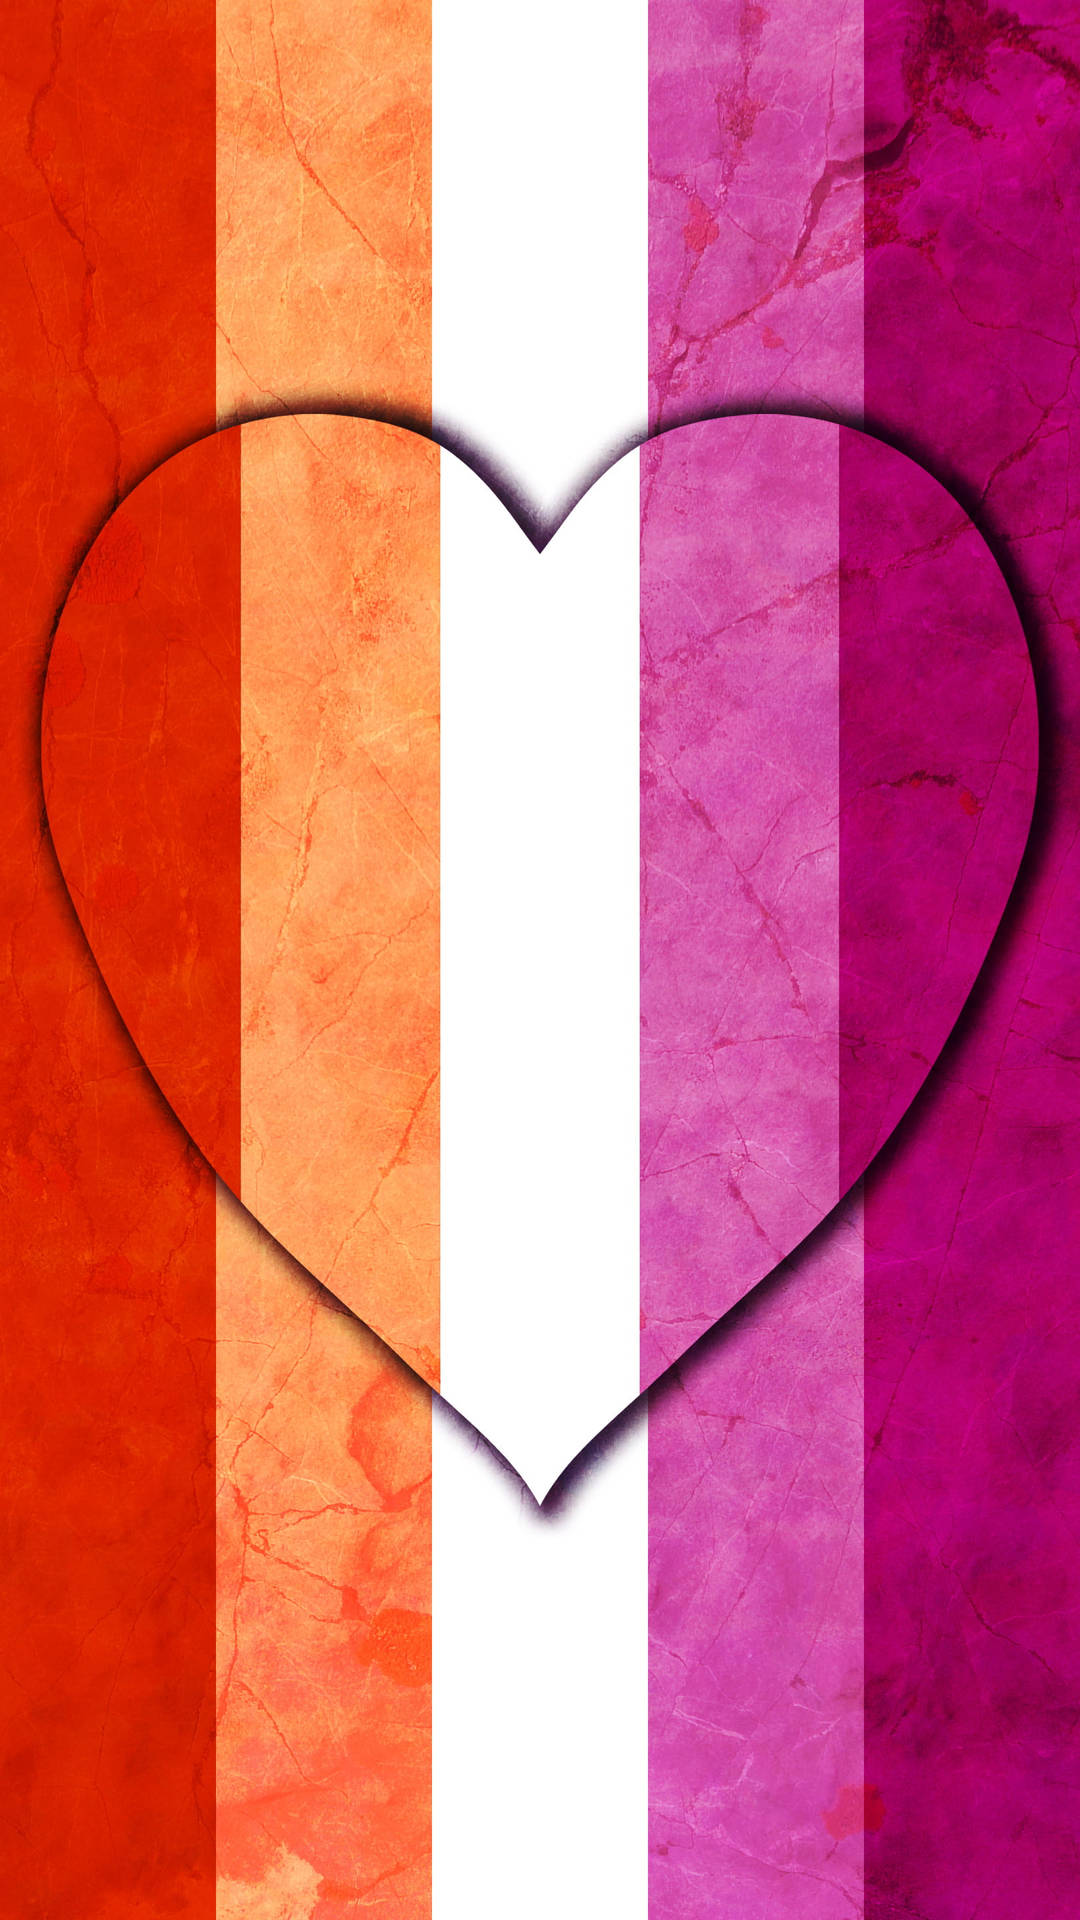 Lesbian Flag With A Heart Wallpaper